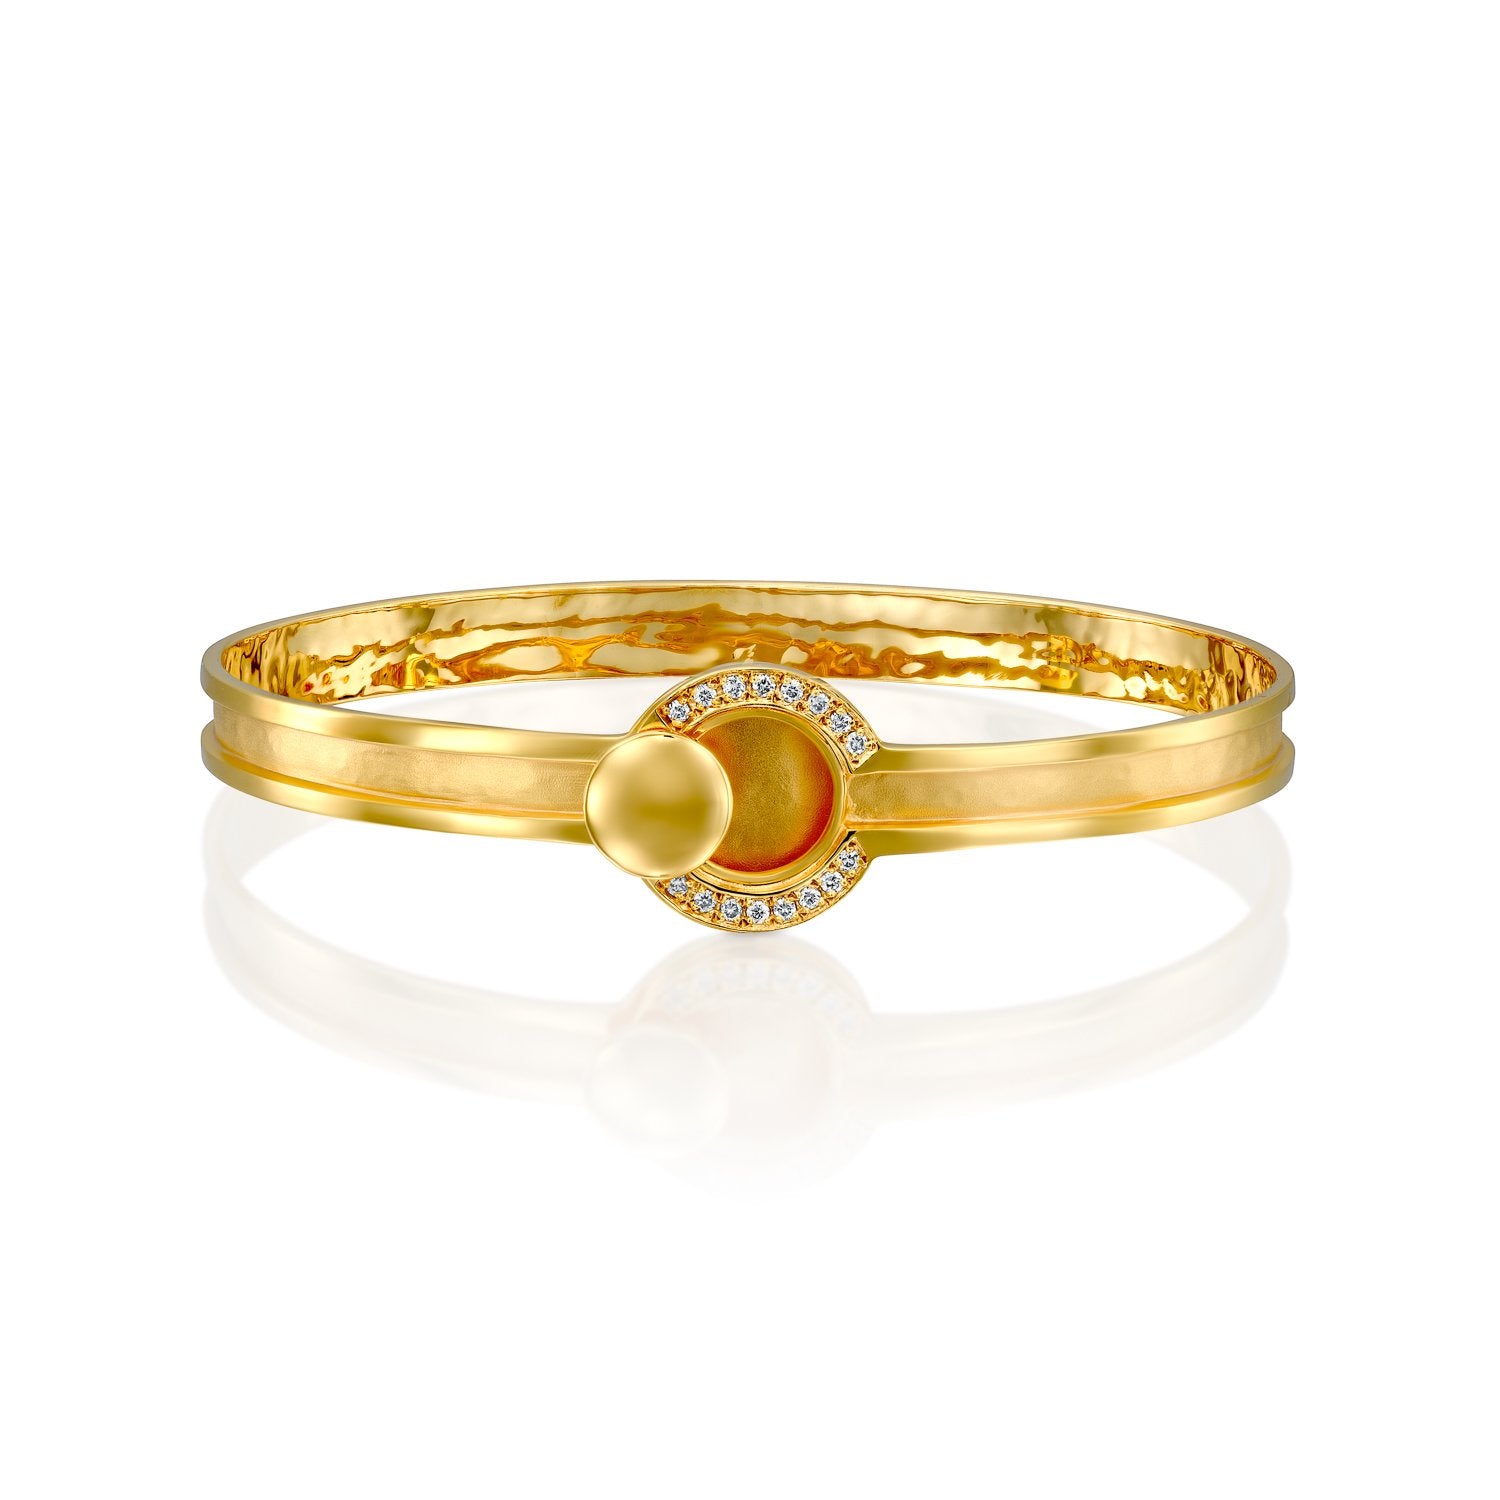 D4892 - 14kt yellow gold hammered & shiny diamond bracelet